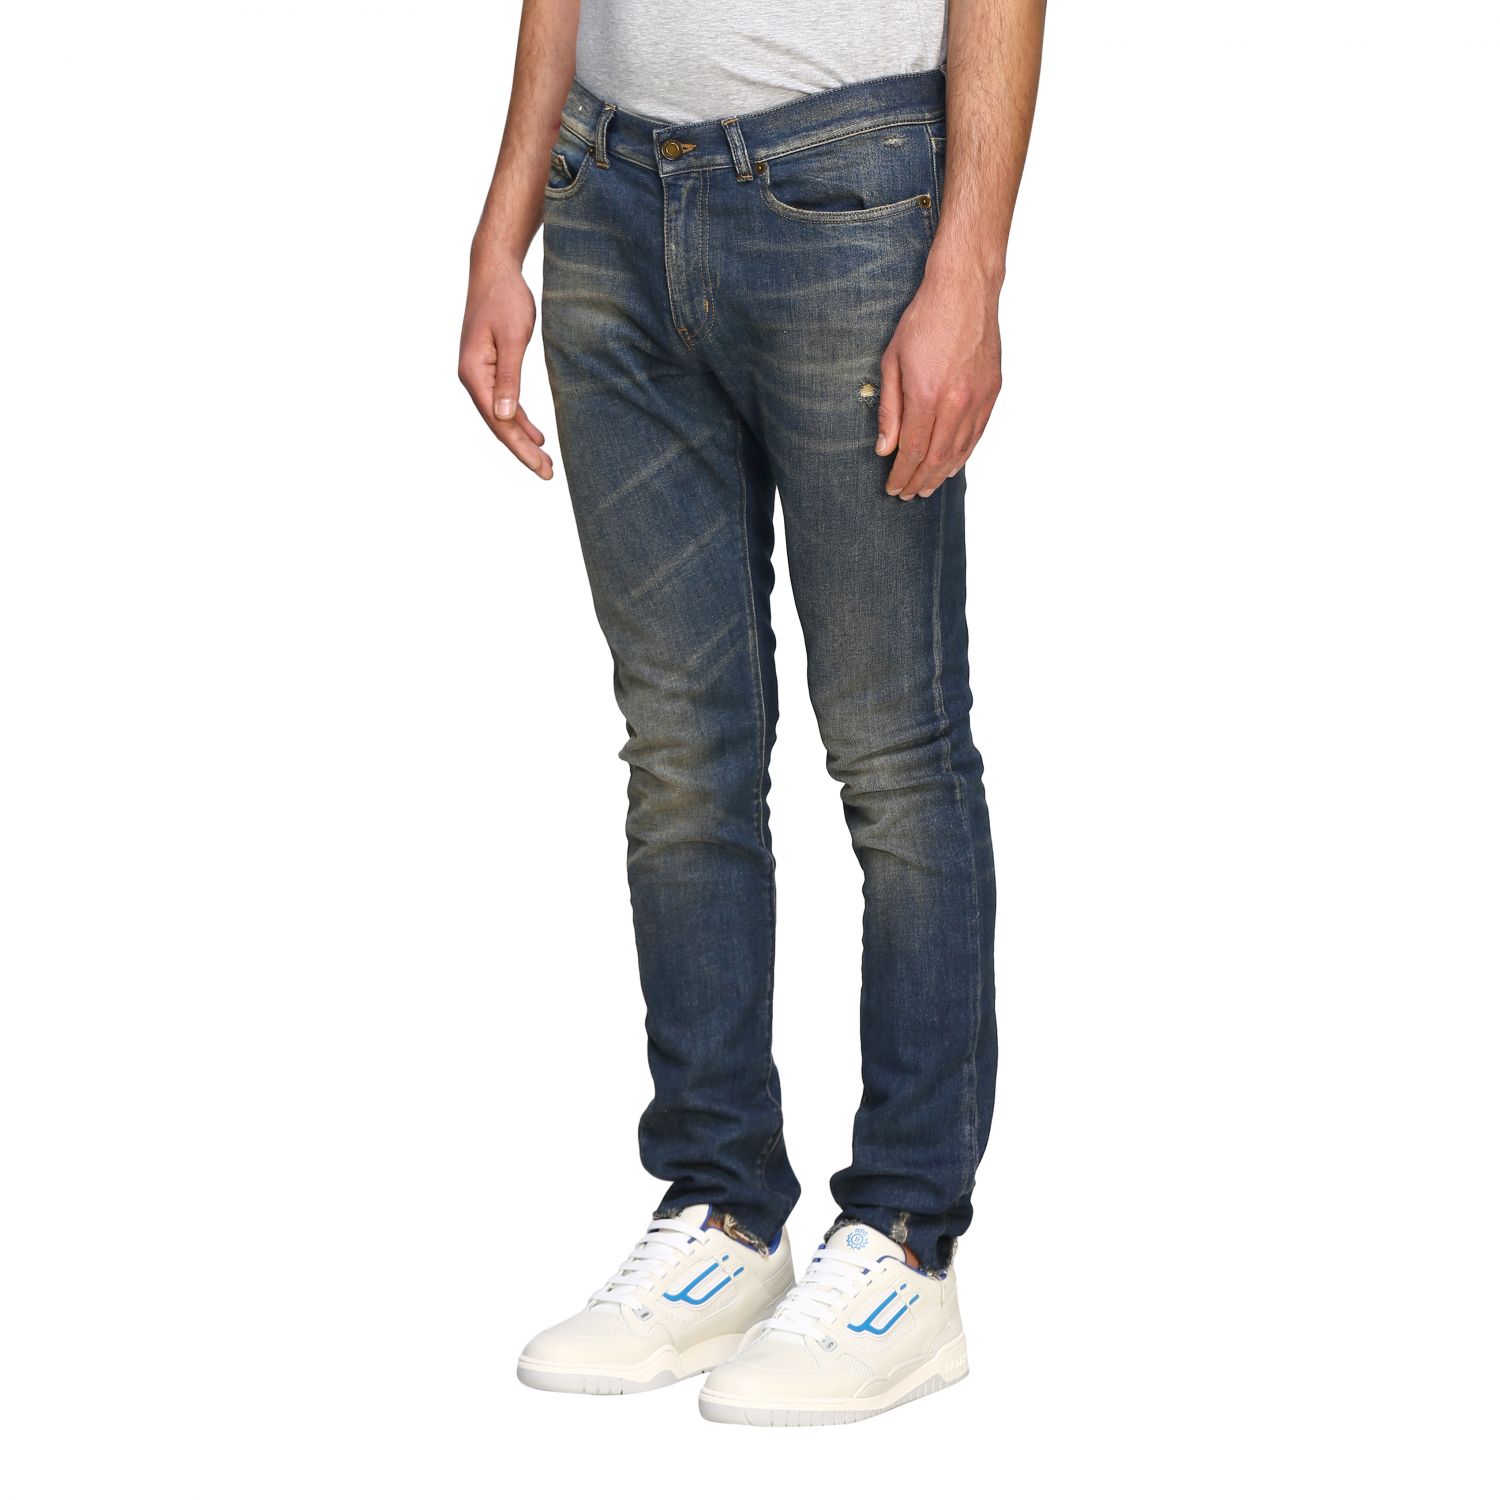 saint laurent skinny jeans mens